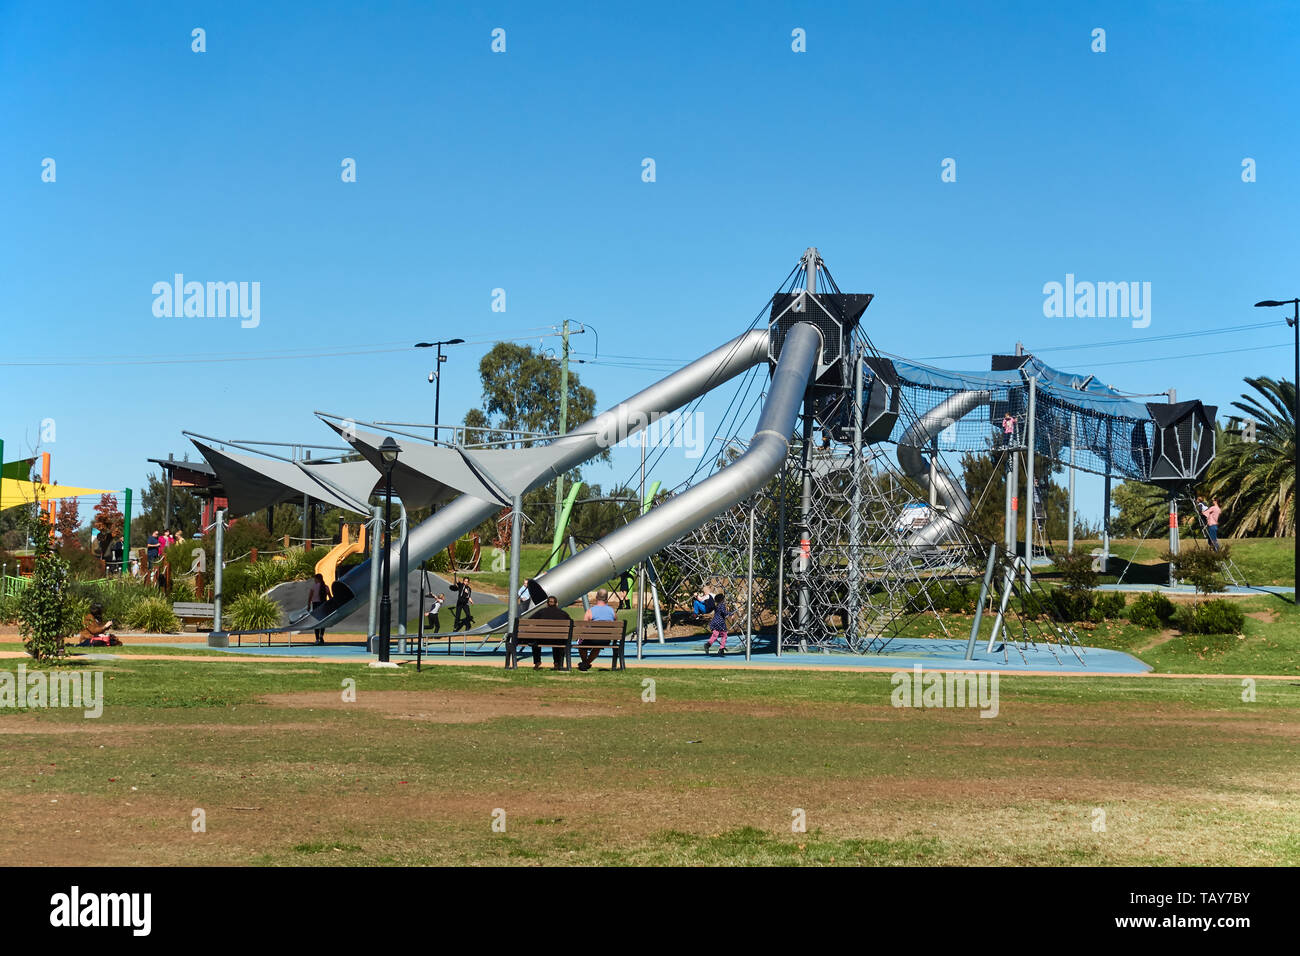 The Skywalk in the children's playground at Bicentennial Park Tamworth NSW Australia. Stock Photo